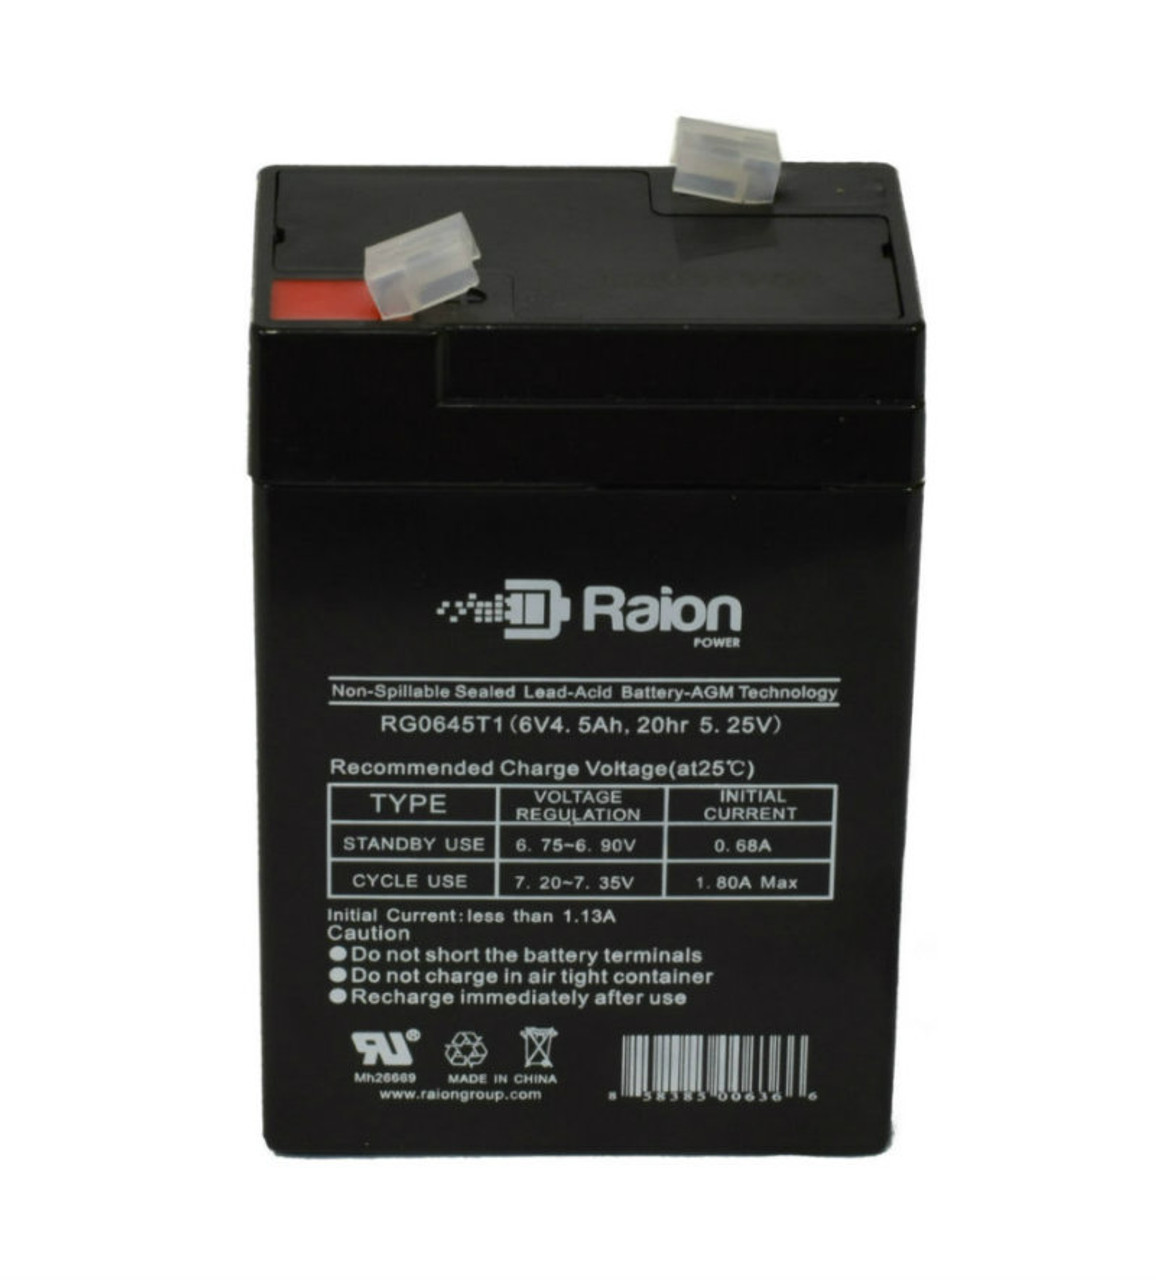 Raion Power RG0645T1 Replacement Battery Cartridge for Yuasa NP4-6